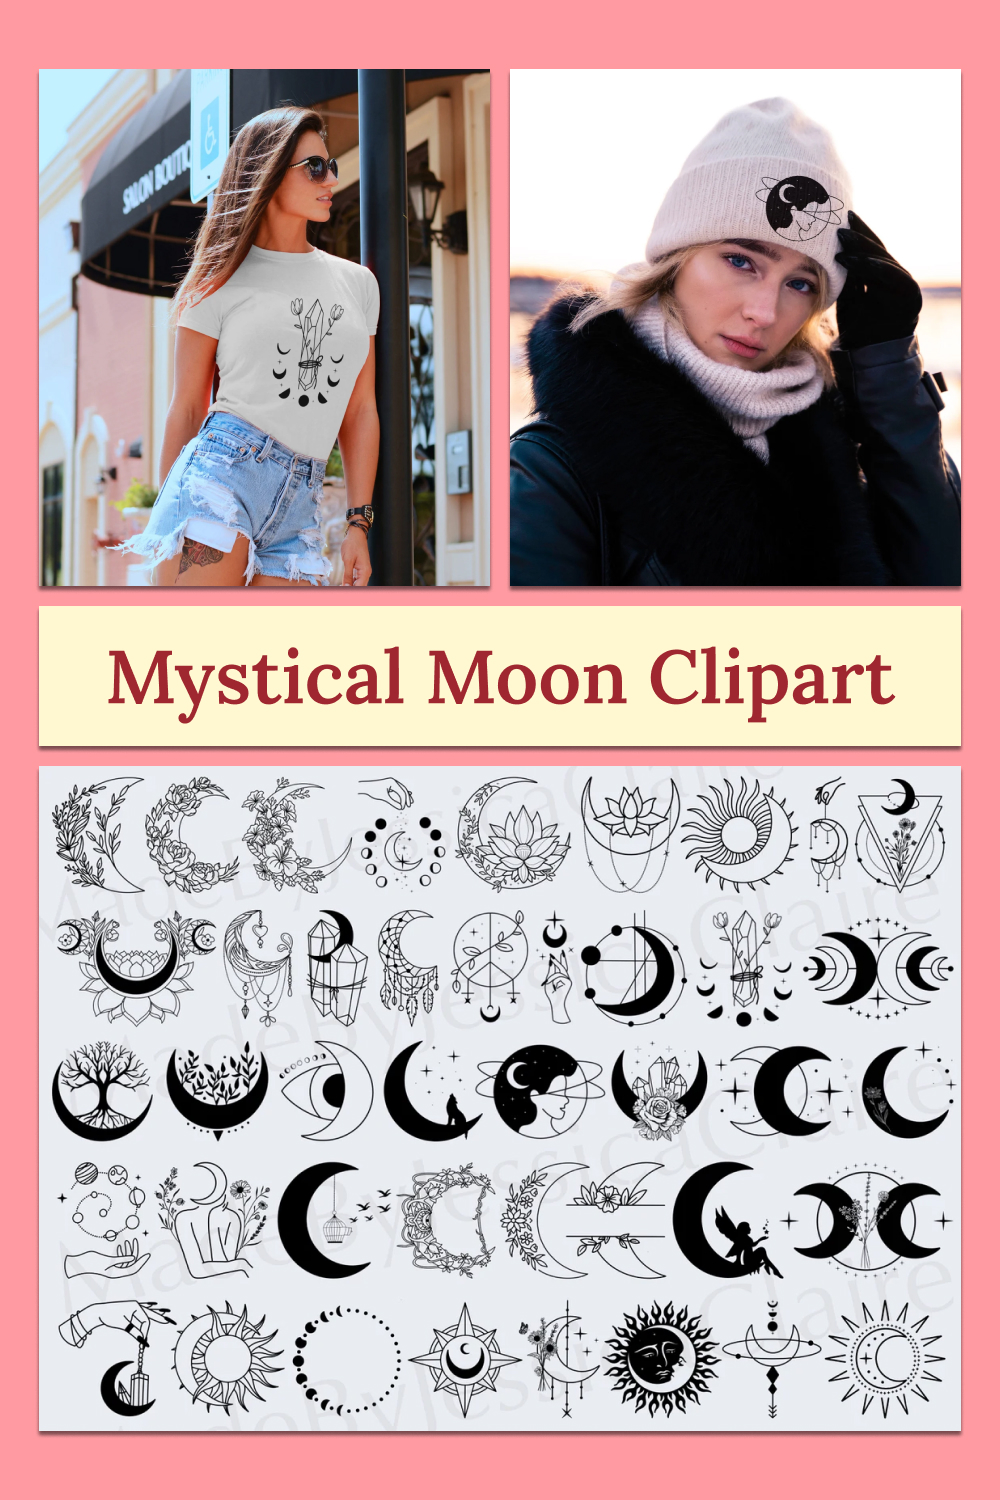 Mystical moon clipart of pinterest.